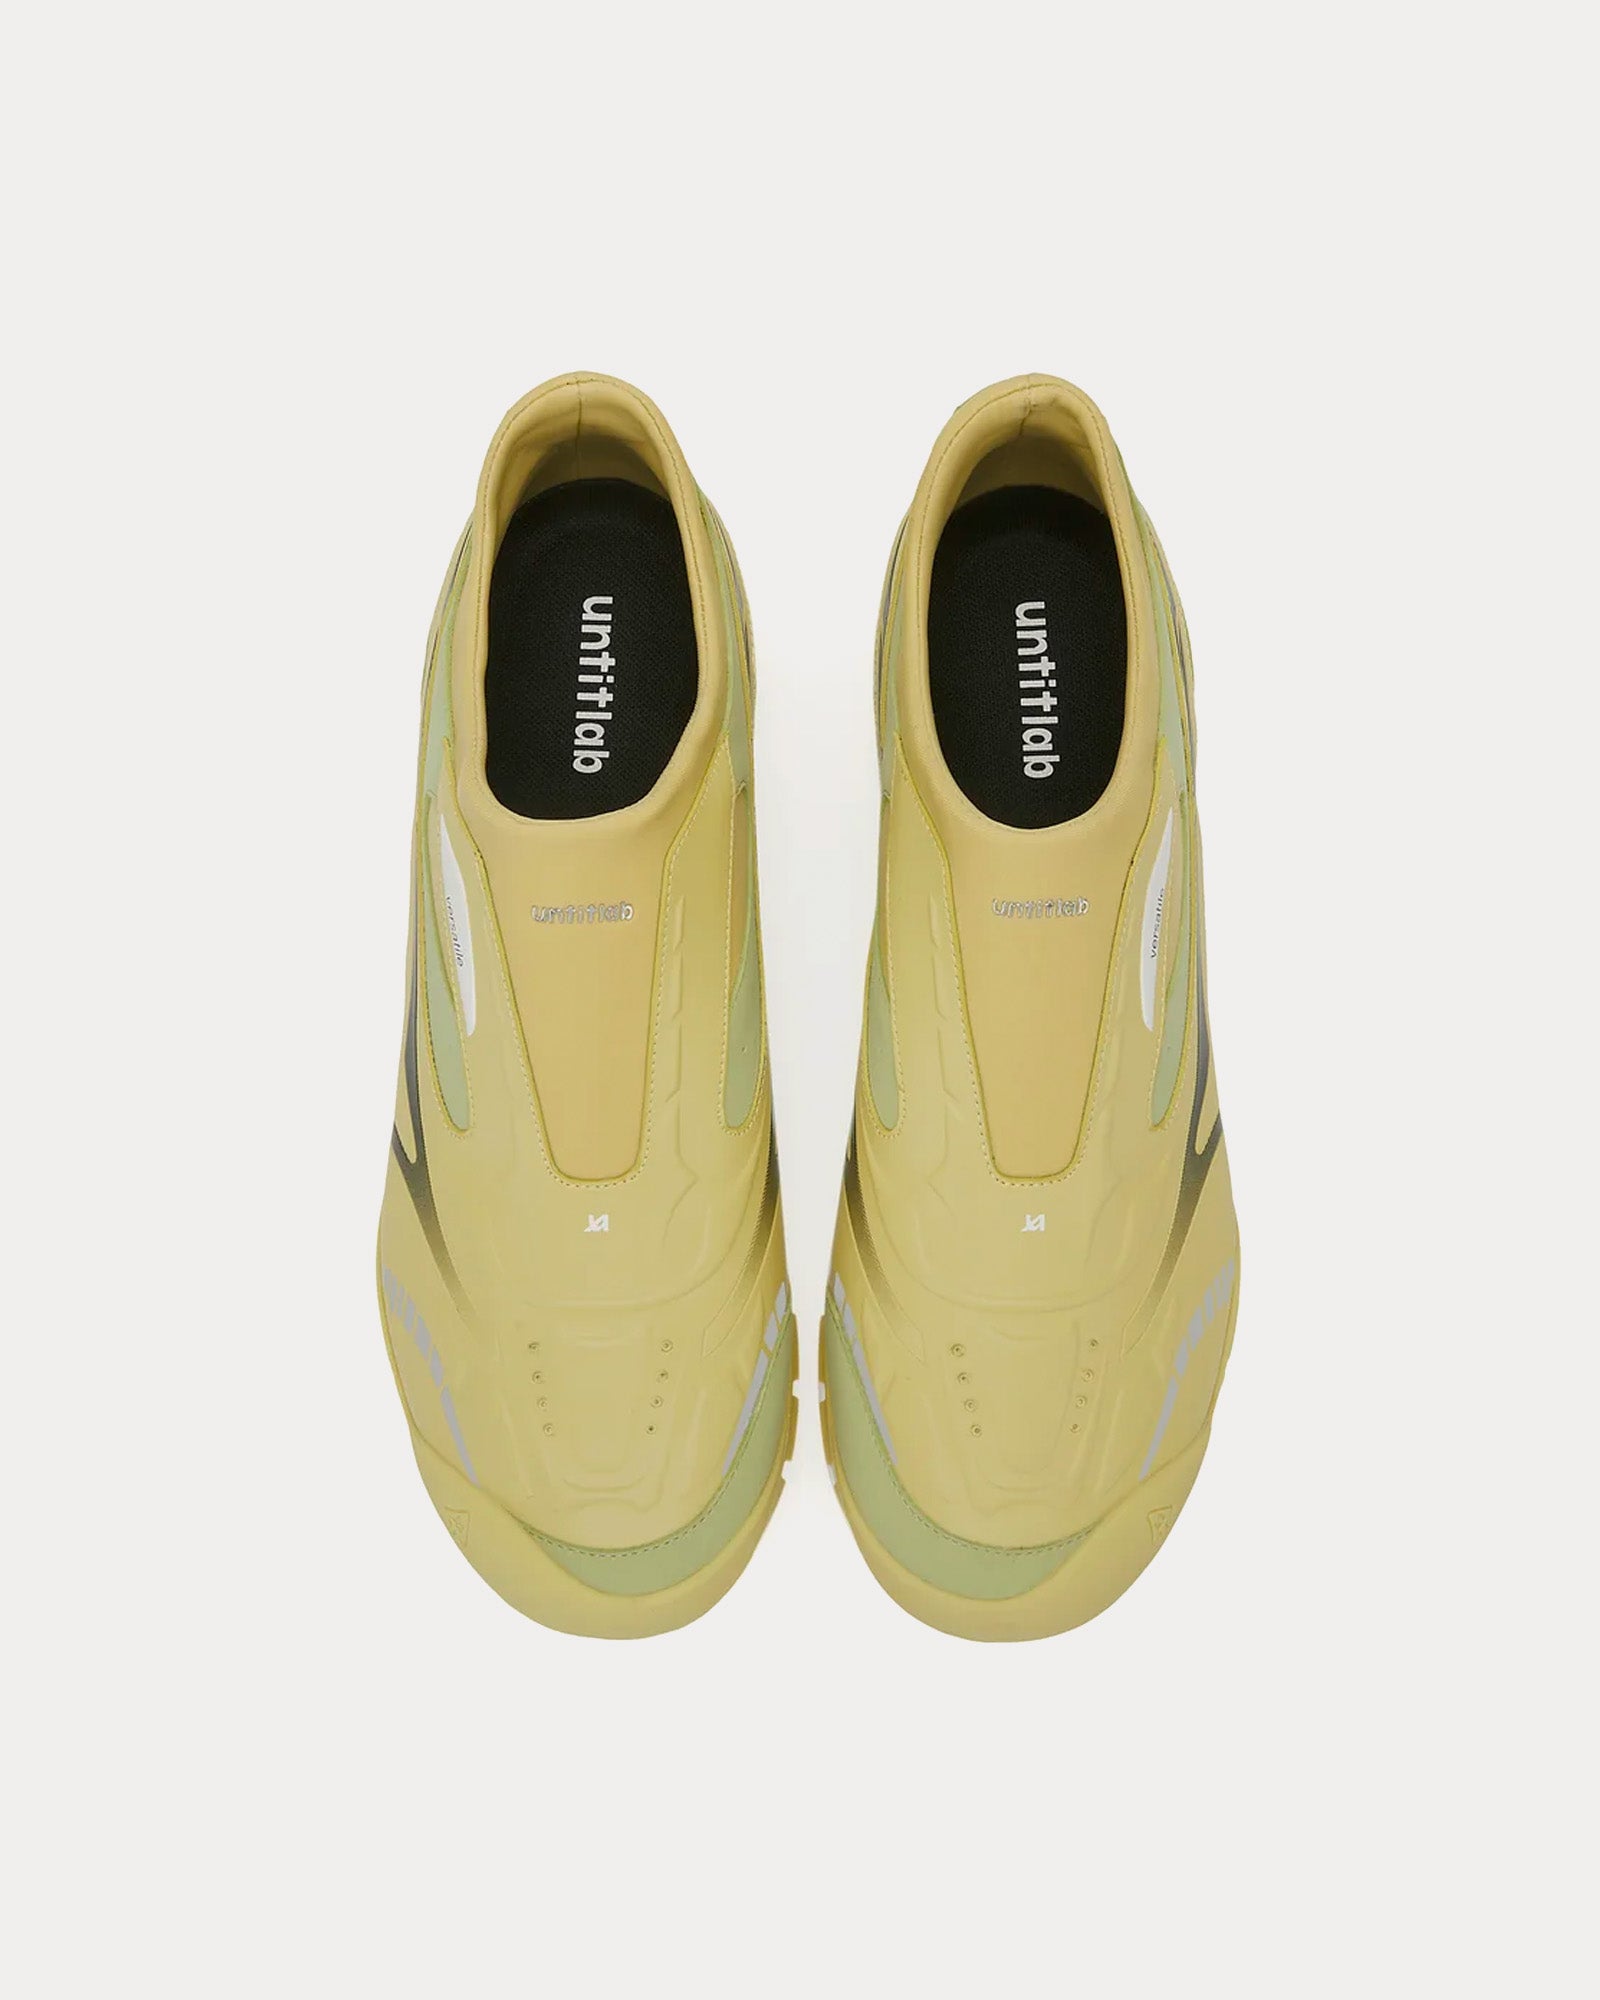 Untitlab - Swift Trek Yellow Slip On Sneakers